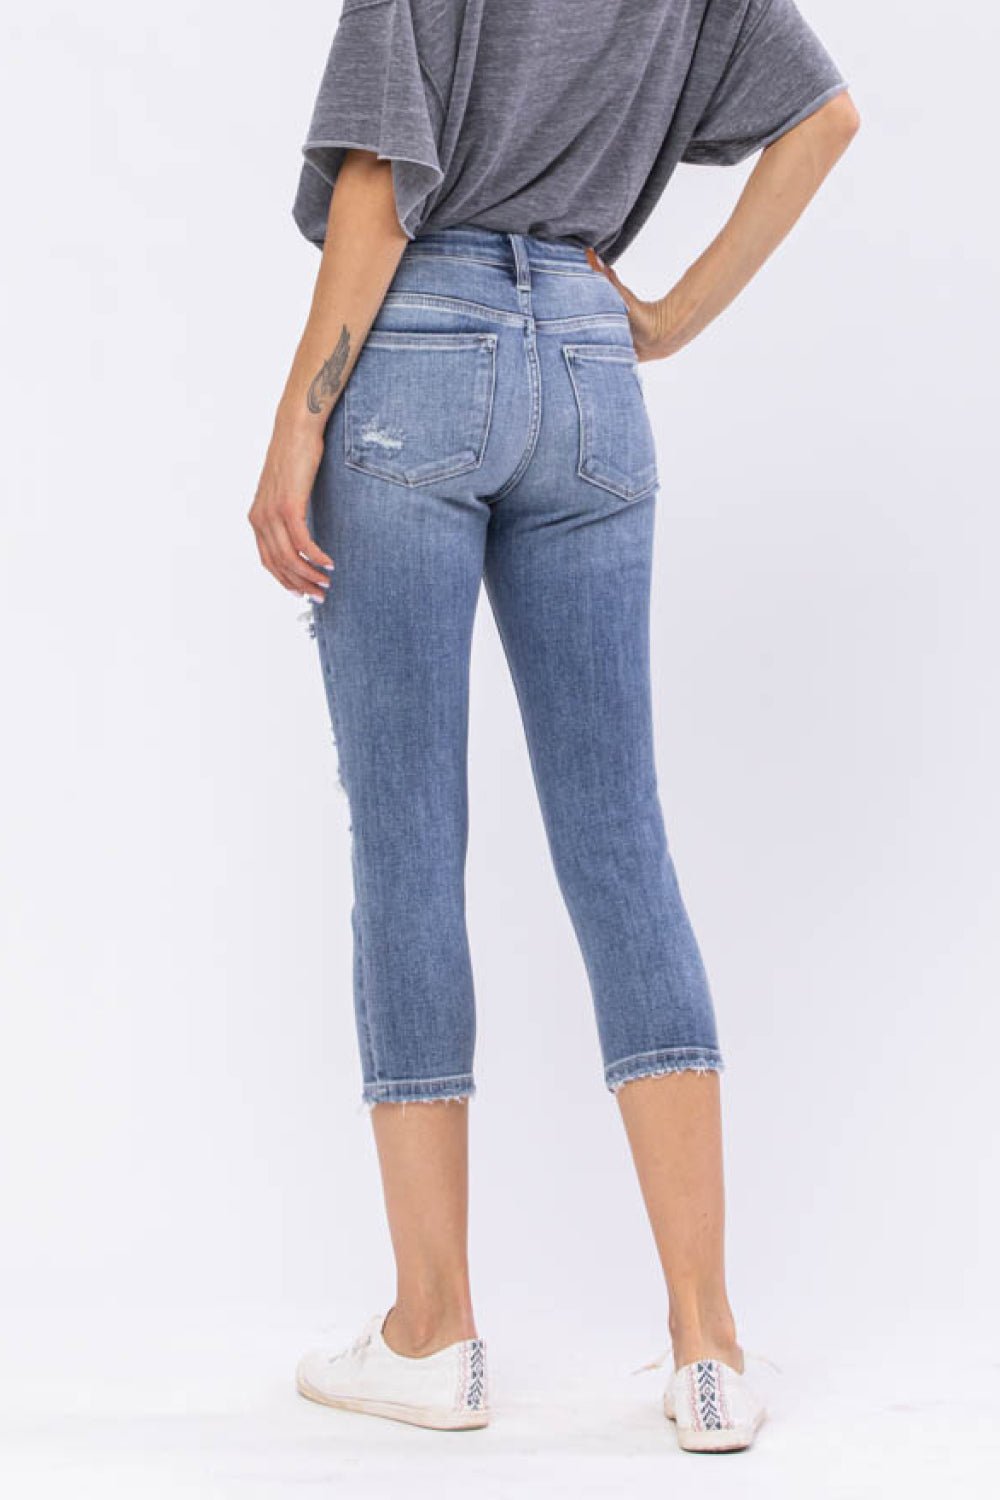 Judy Blue Wren Full Size Distressed Mid-Rise Denim Capri - Fashion Girl Online Store